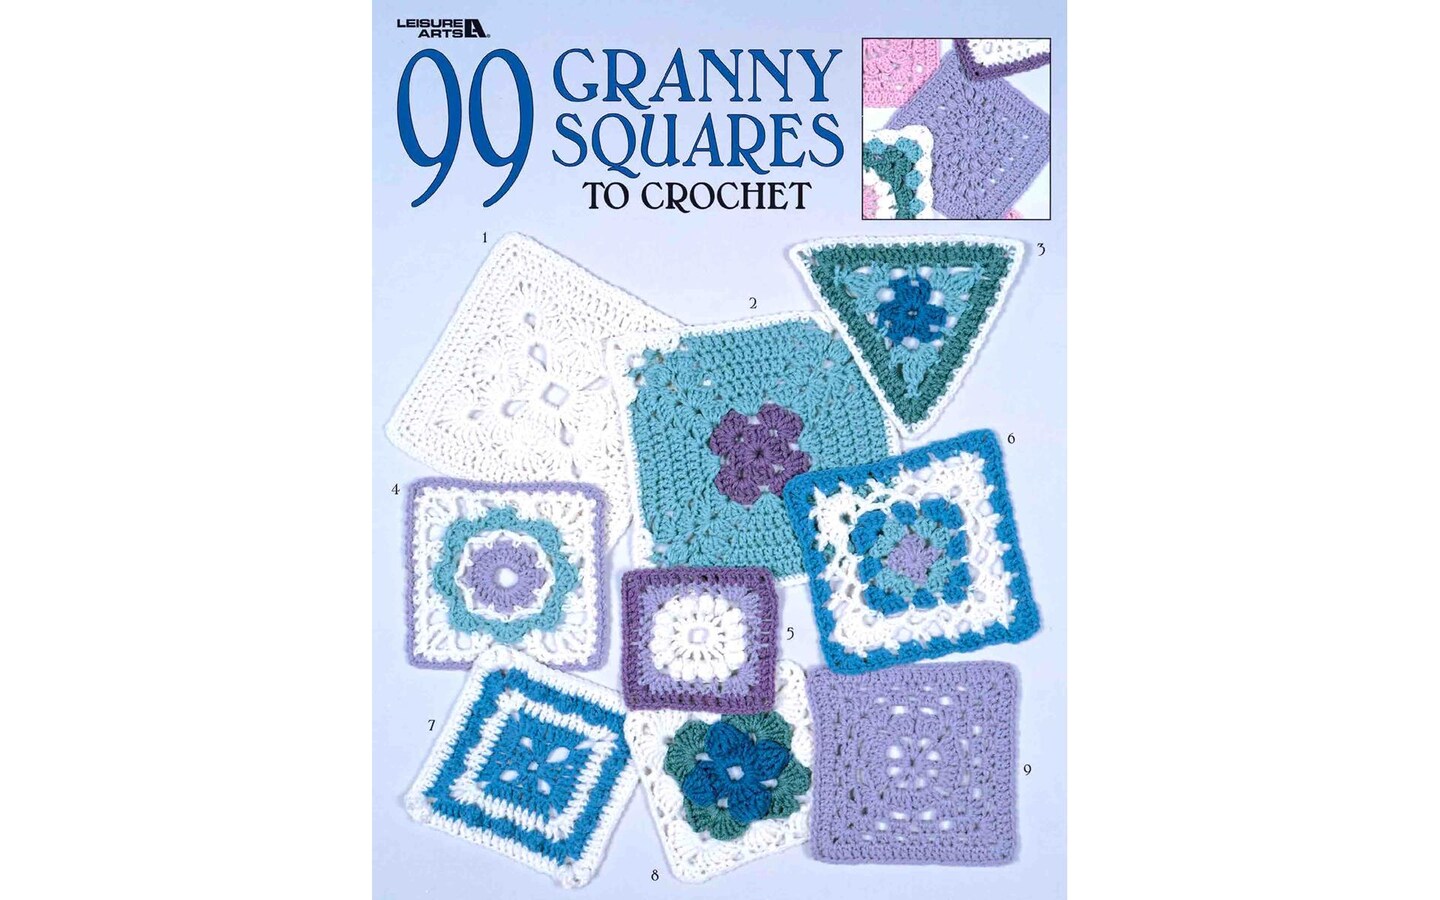 Leisure Arts 99 Granny Squares Book